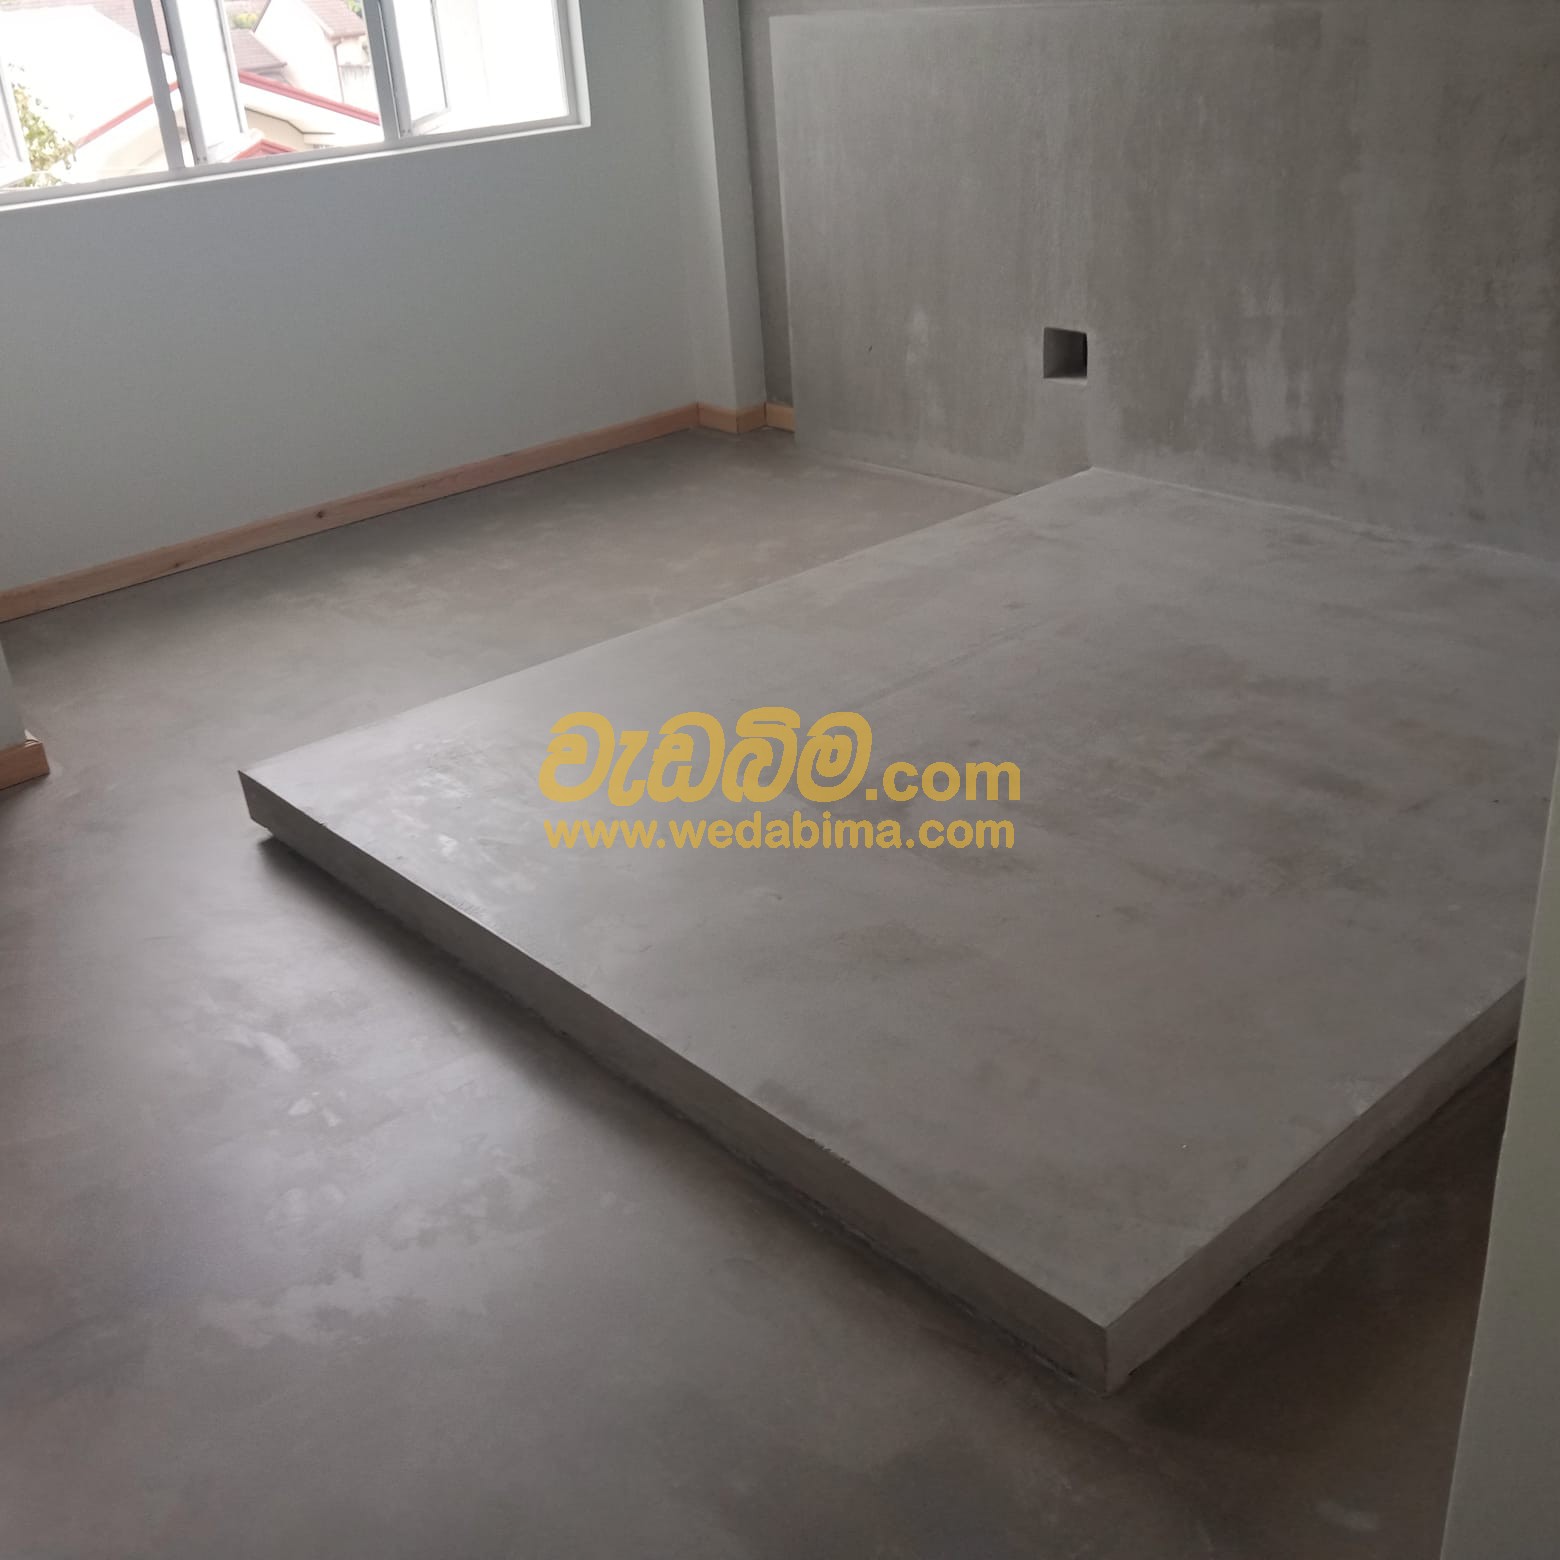 Titanium Cement Floors and Walls